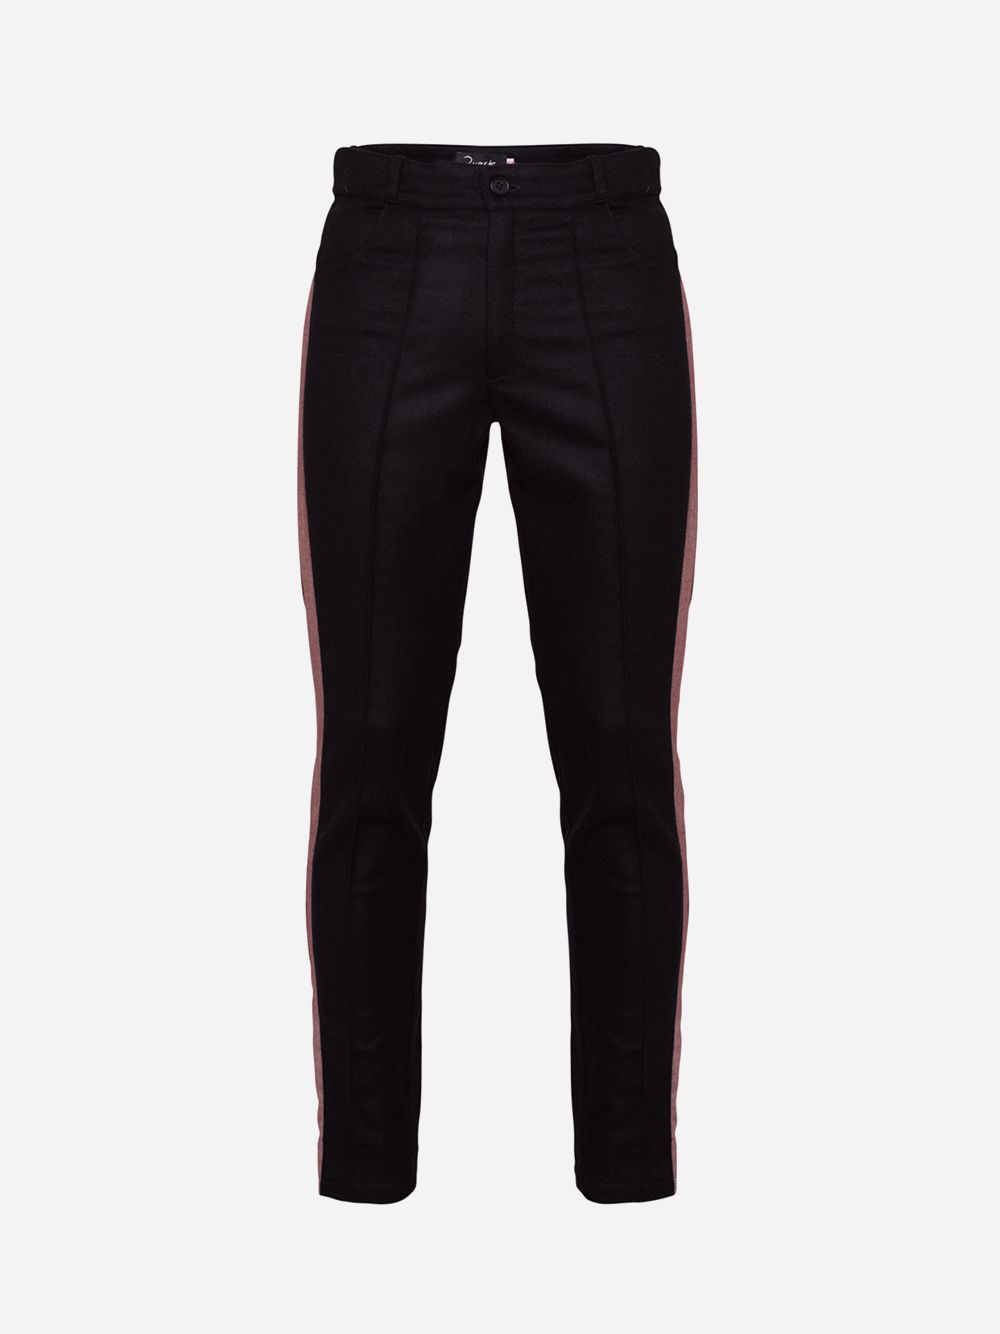 Black Trousers With Stripe | Duarte 